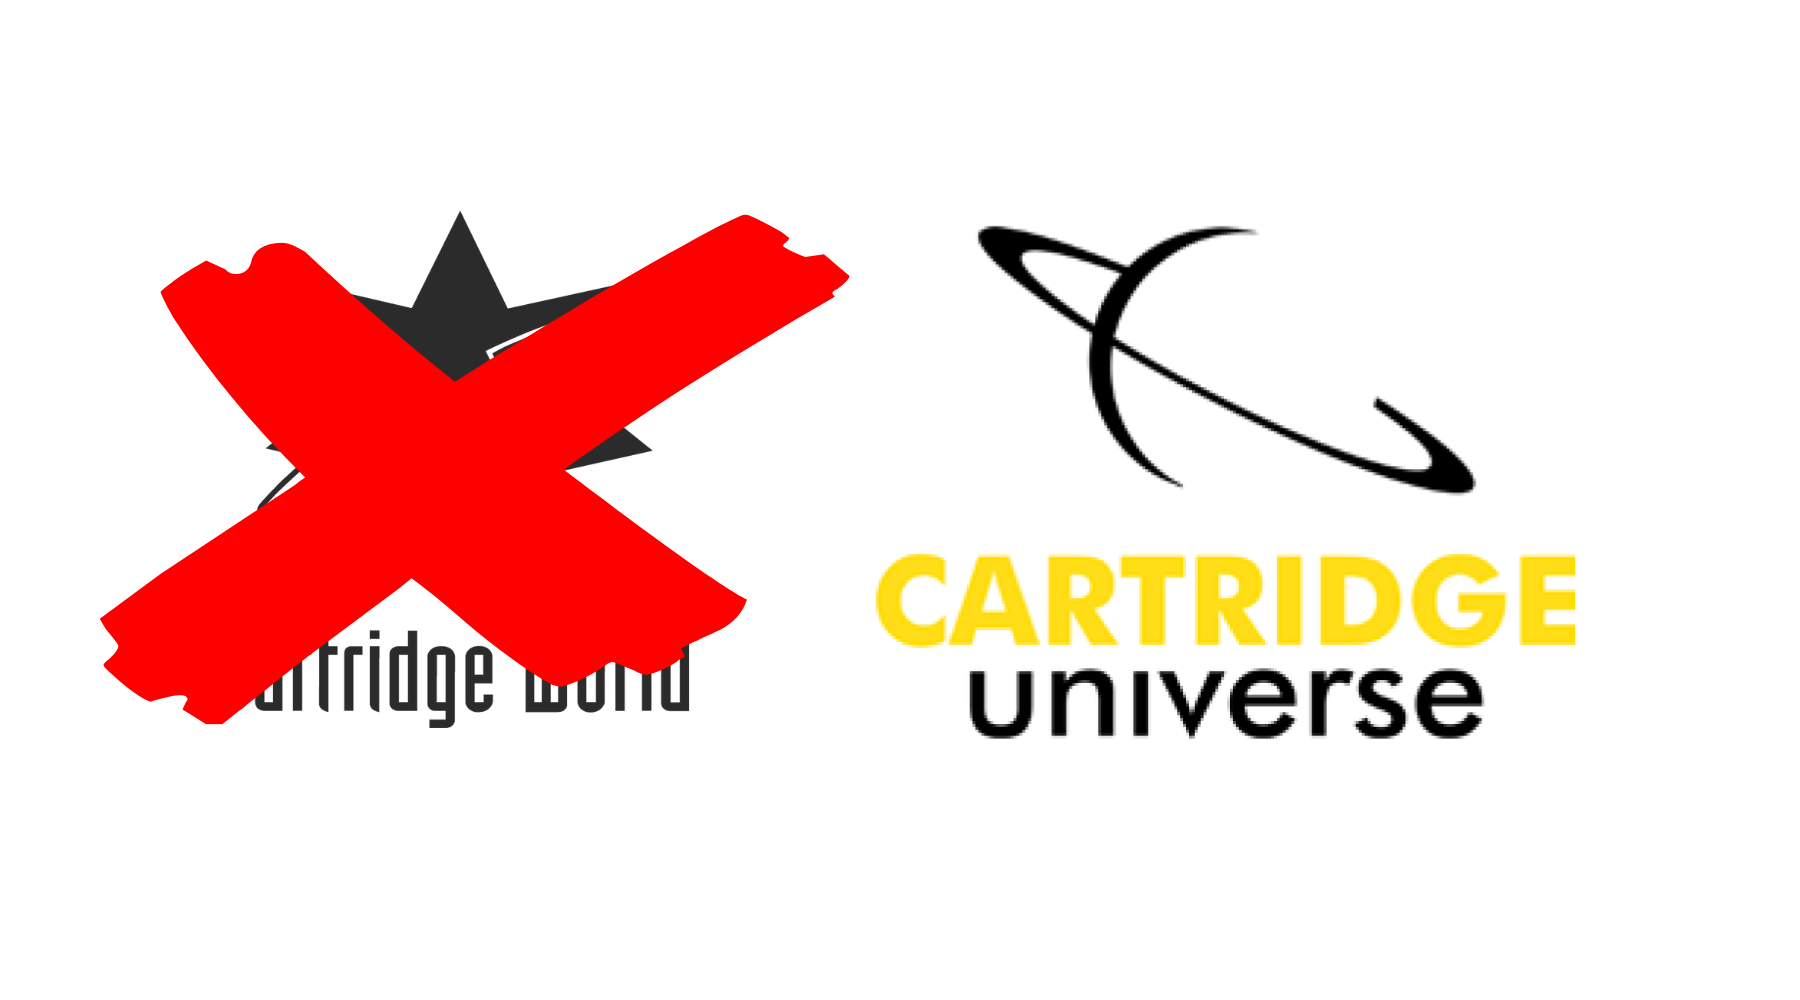 From Cartridge World to Cartridge Universe